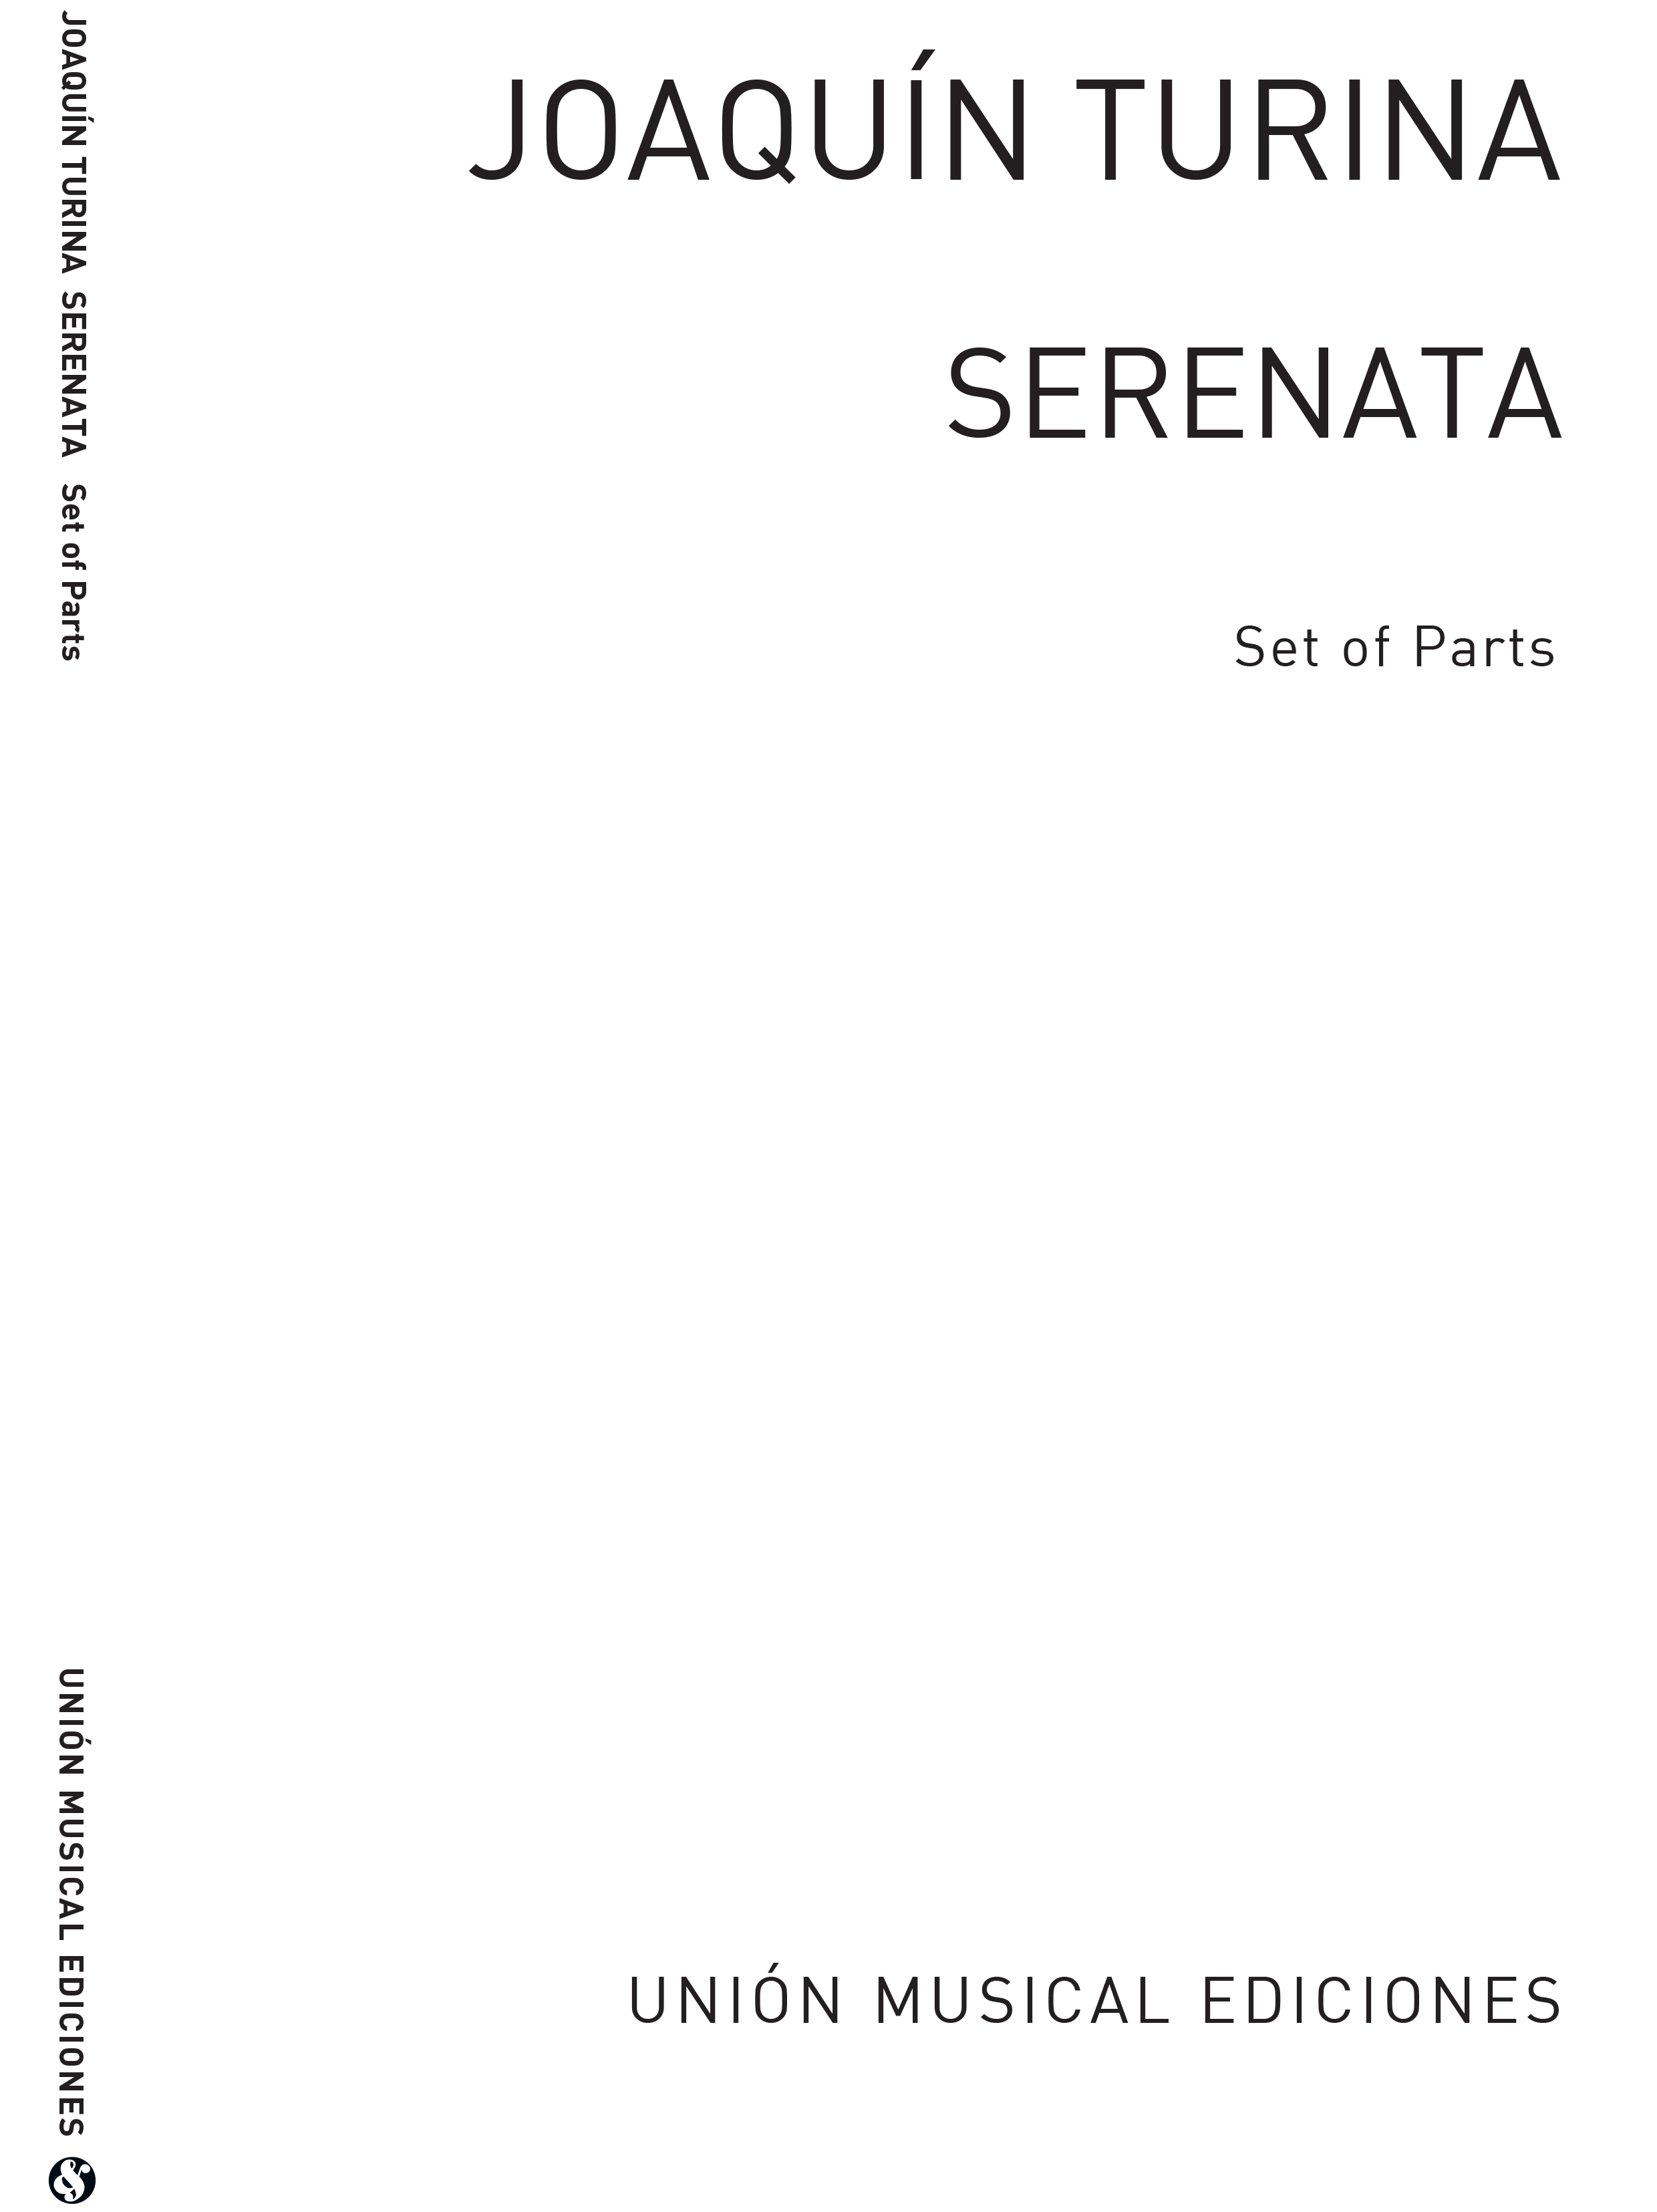 Joaquín Turina: Serenata Opus 87 For String Quartet: String Quartet: Parts